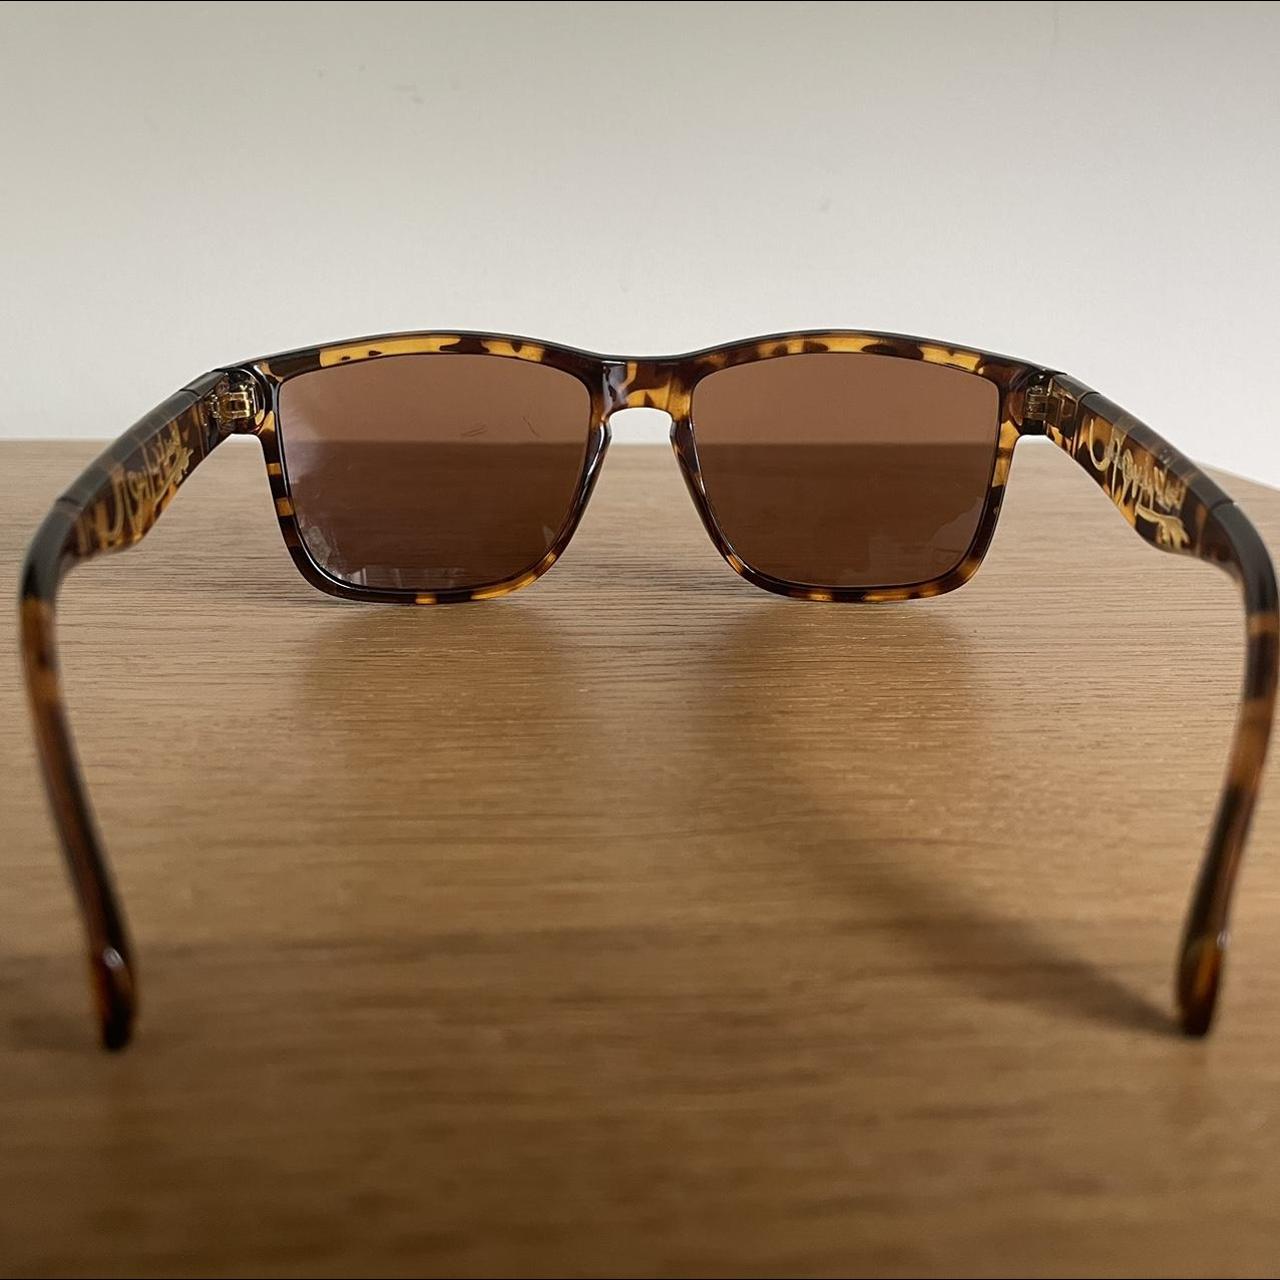 Depop style print - Womens tiger Quiksilver sunglasses...